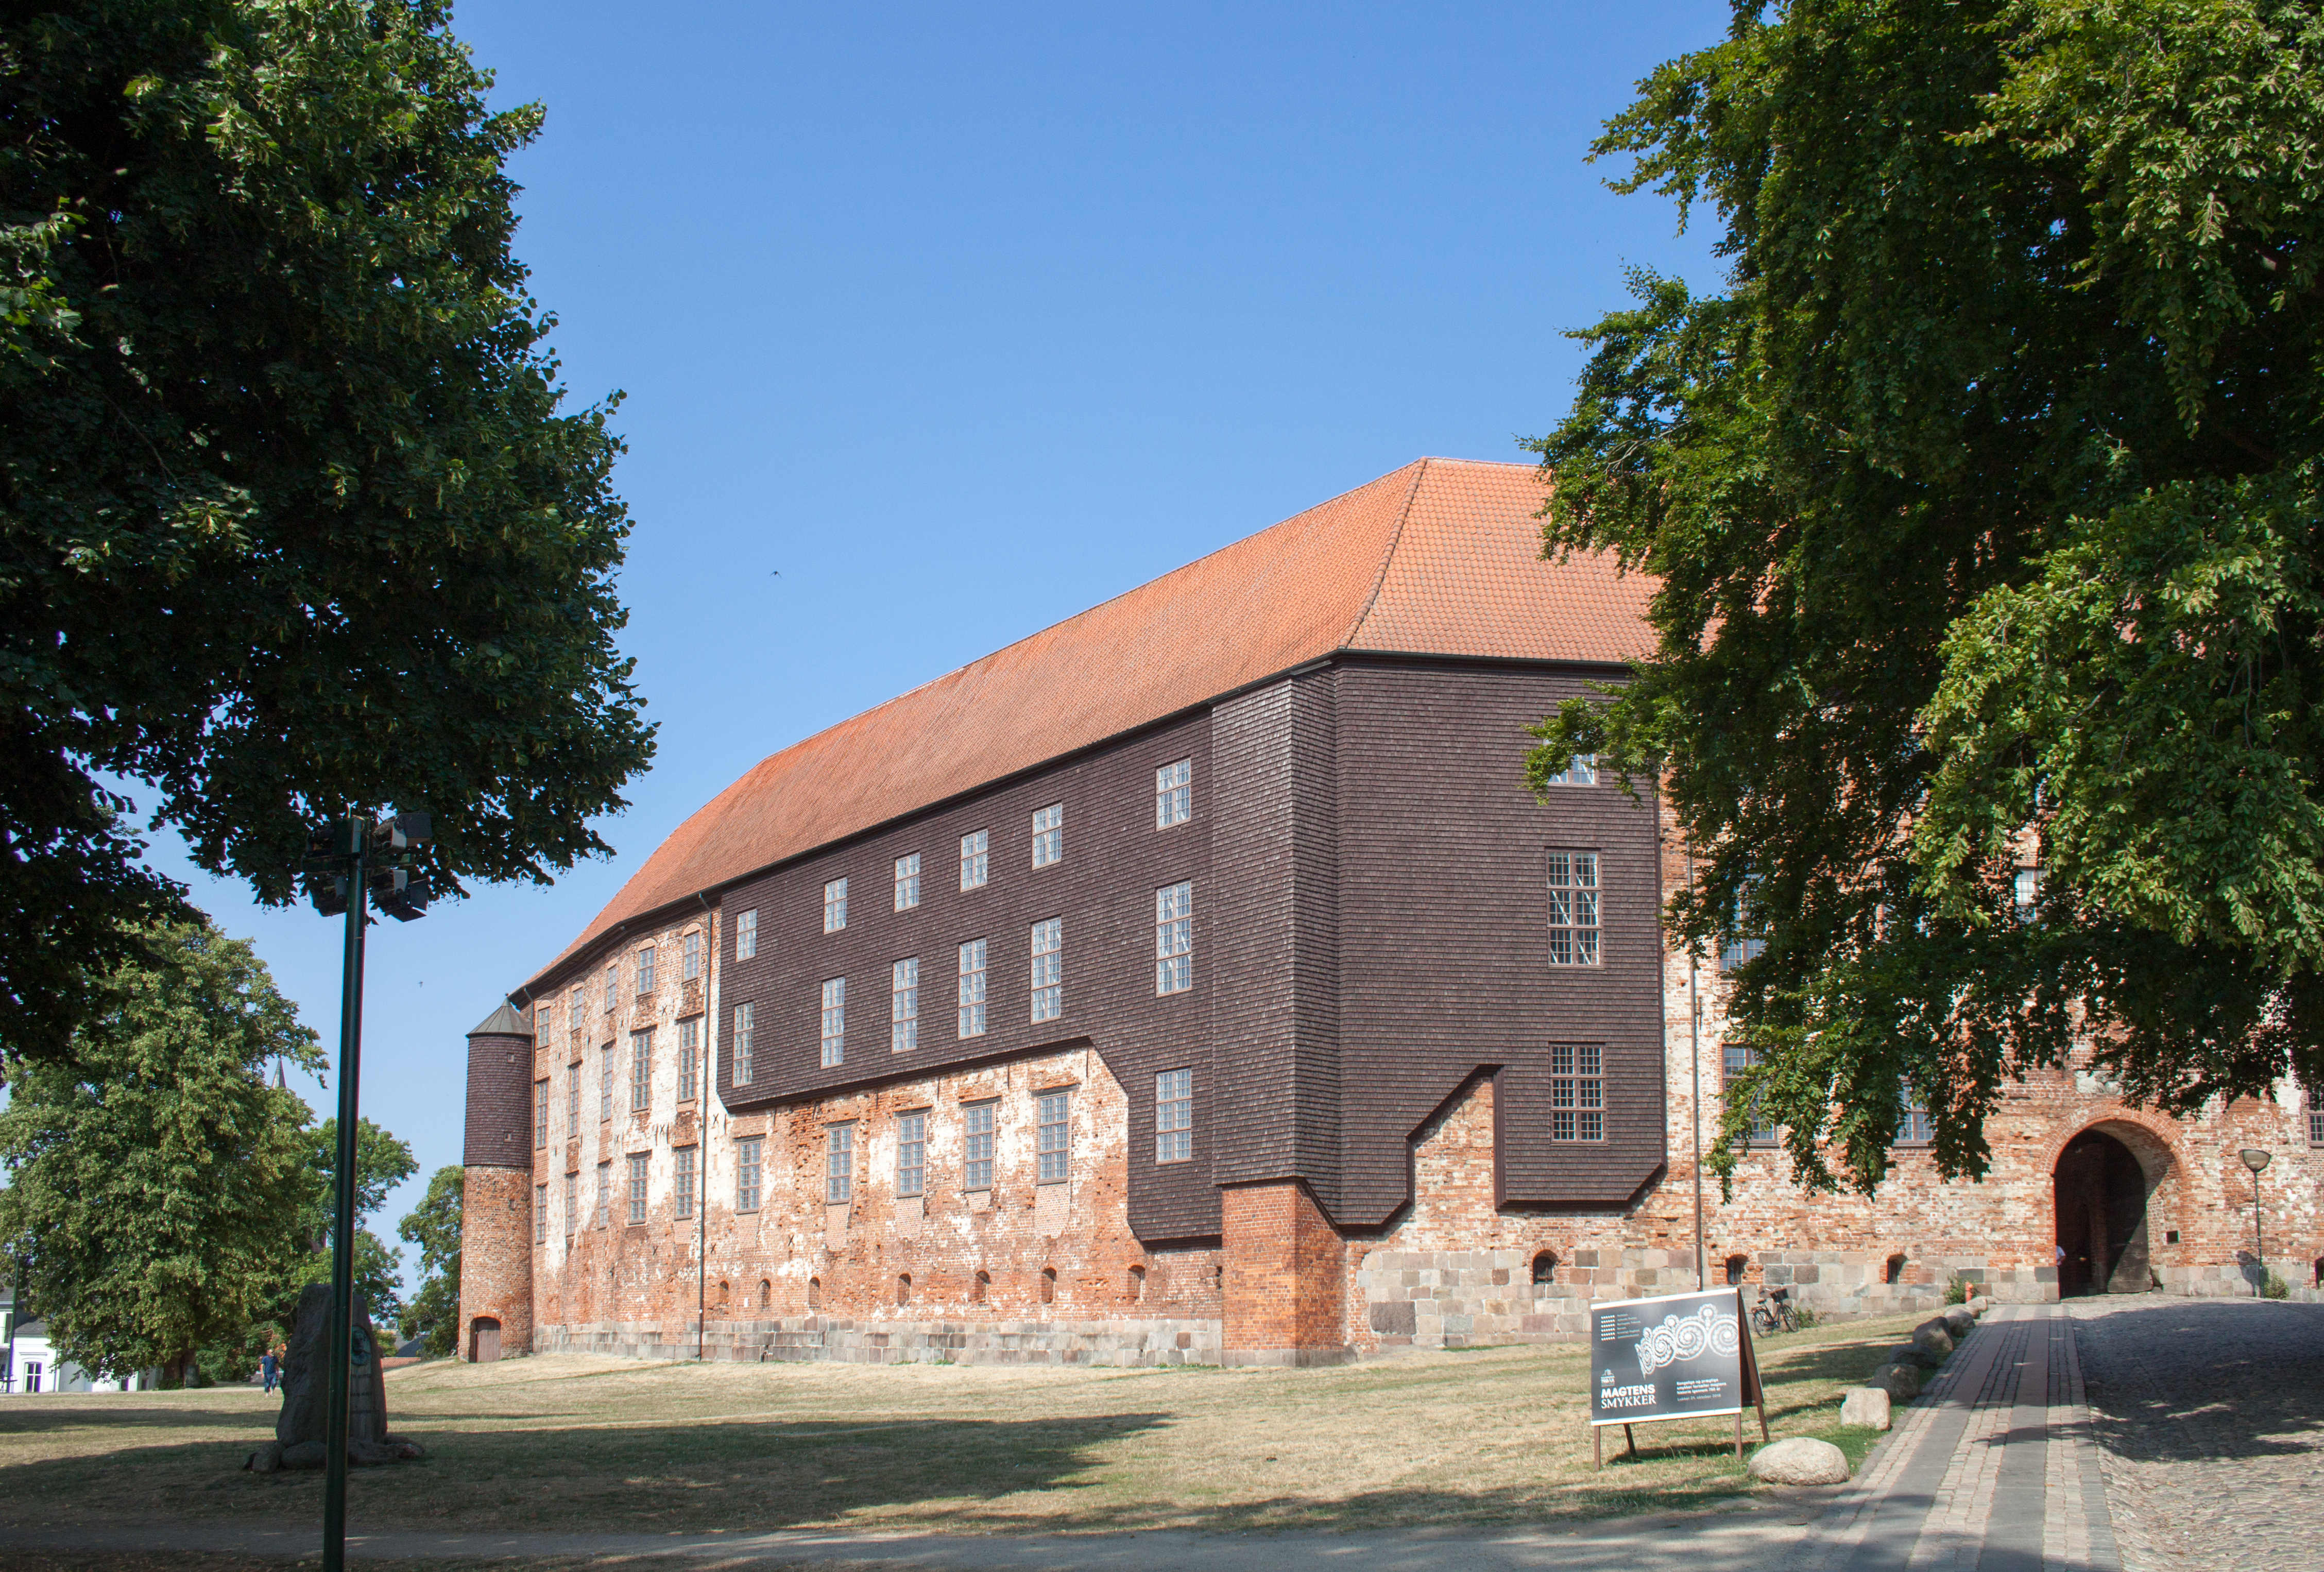 Overvåge skat acceptabel File:Towards the entrance of Koldinghus castle, 2018-07-26.jpg - Wikimedia  Commons